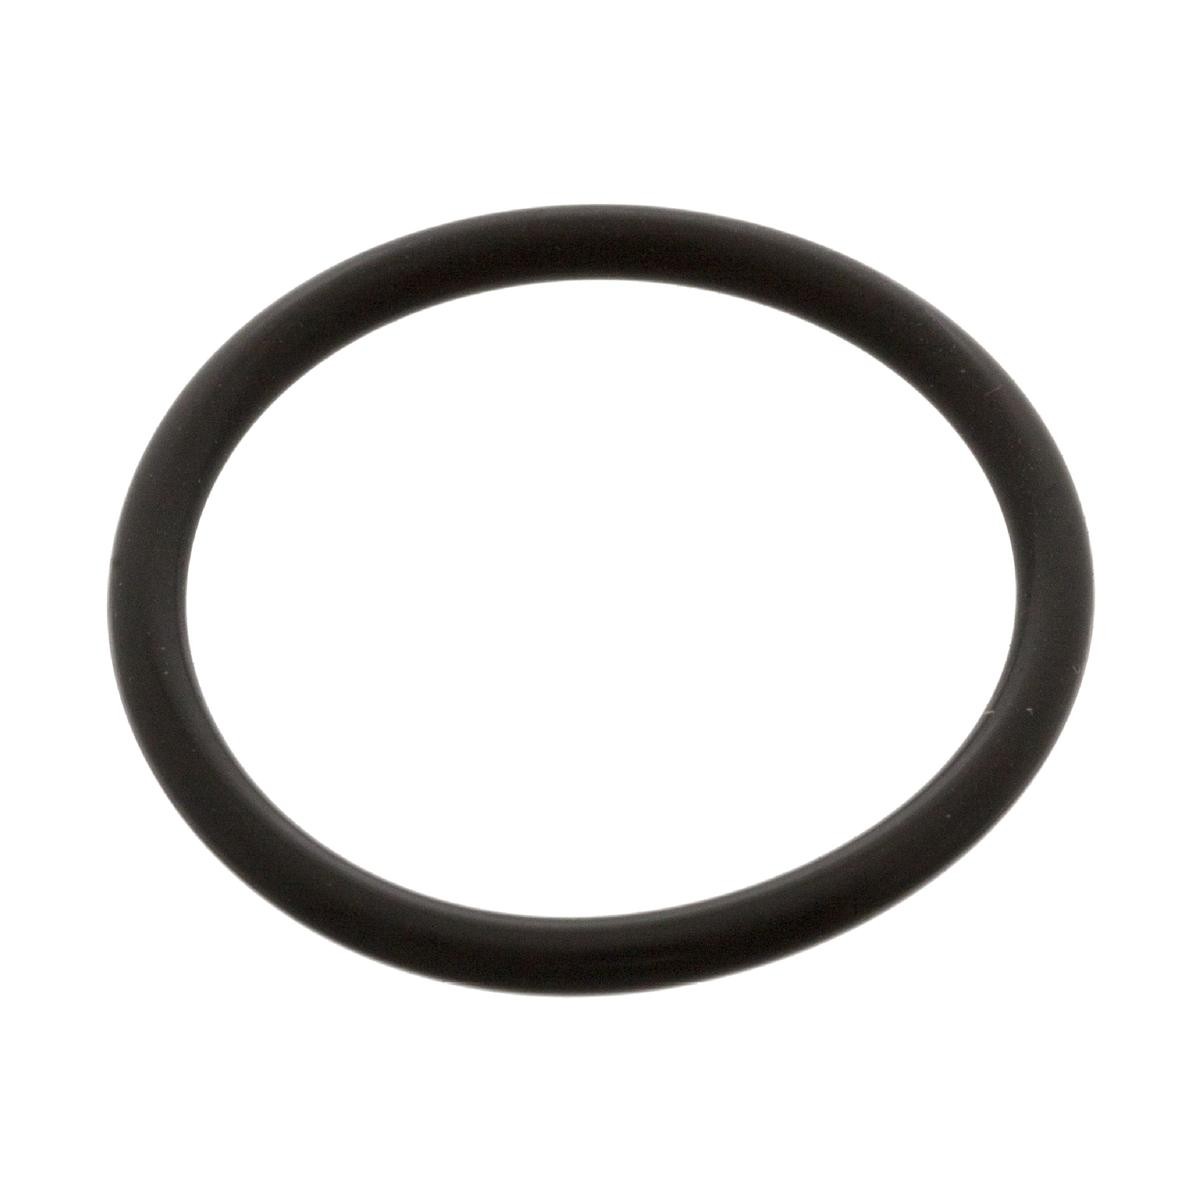 FEBI BILSTEIN 32 x 3 mm, NBR (nitrile butadiene rubber) Seal Ring 02200 buy